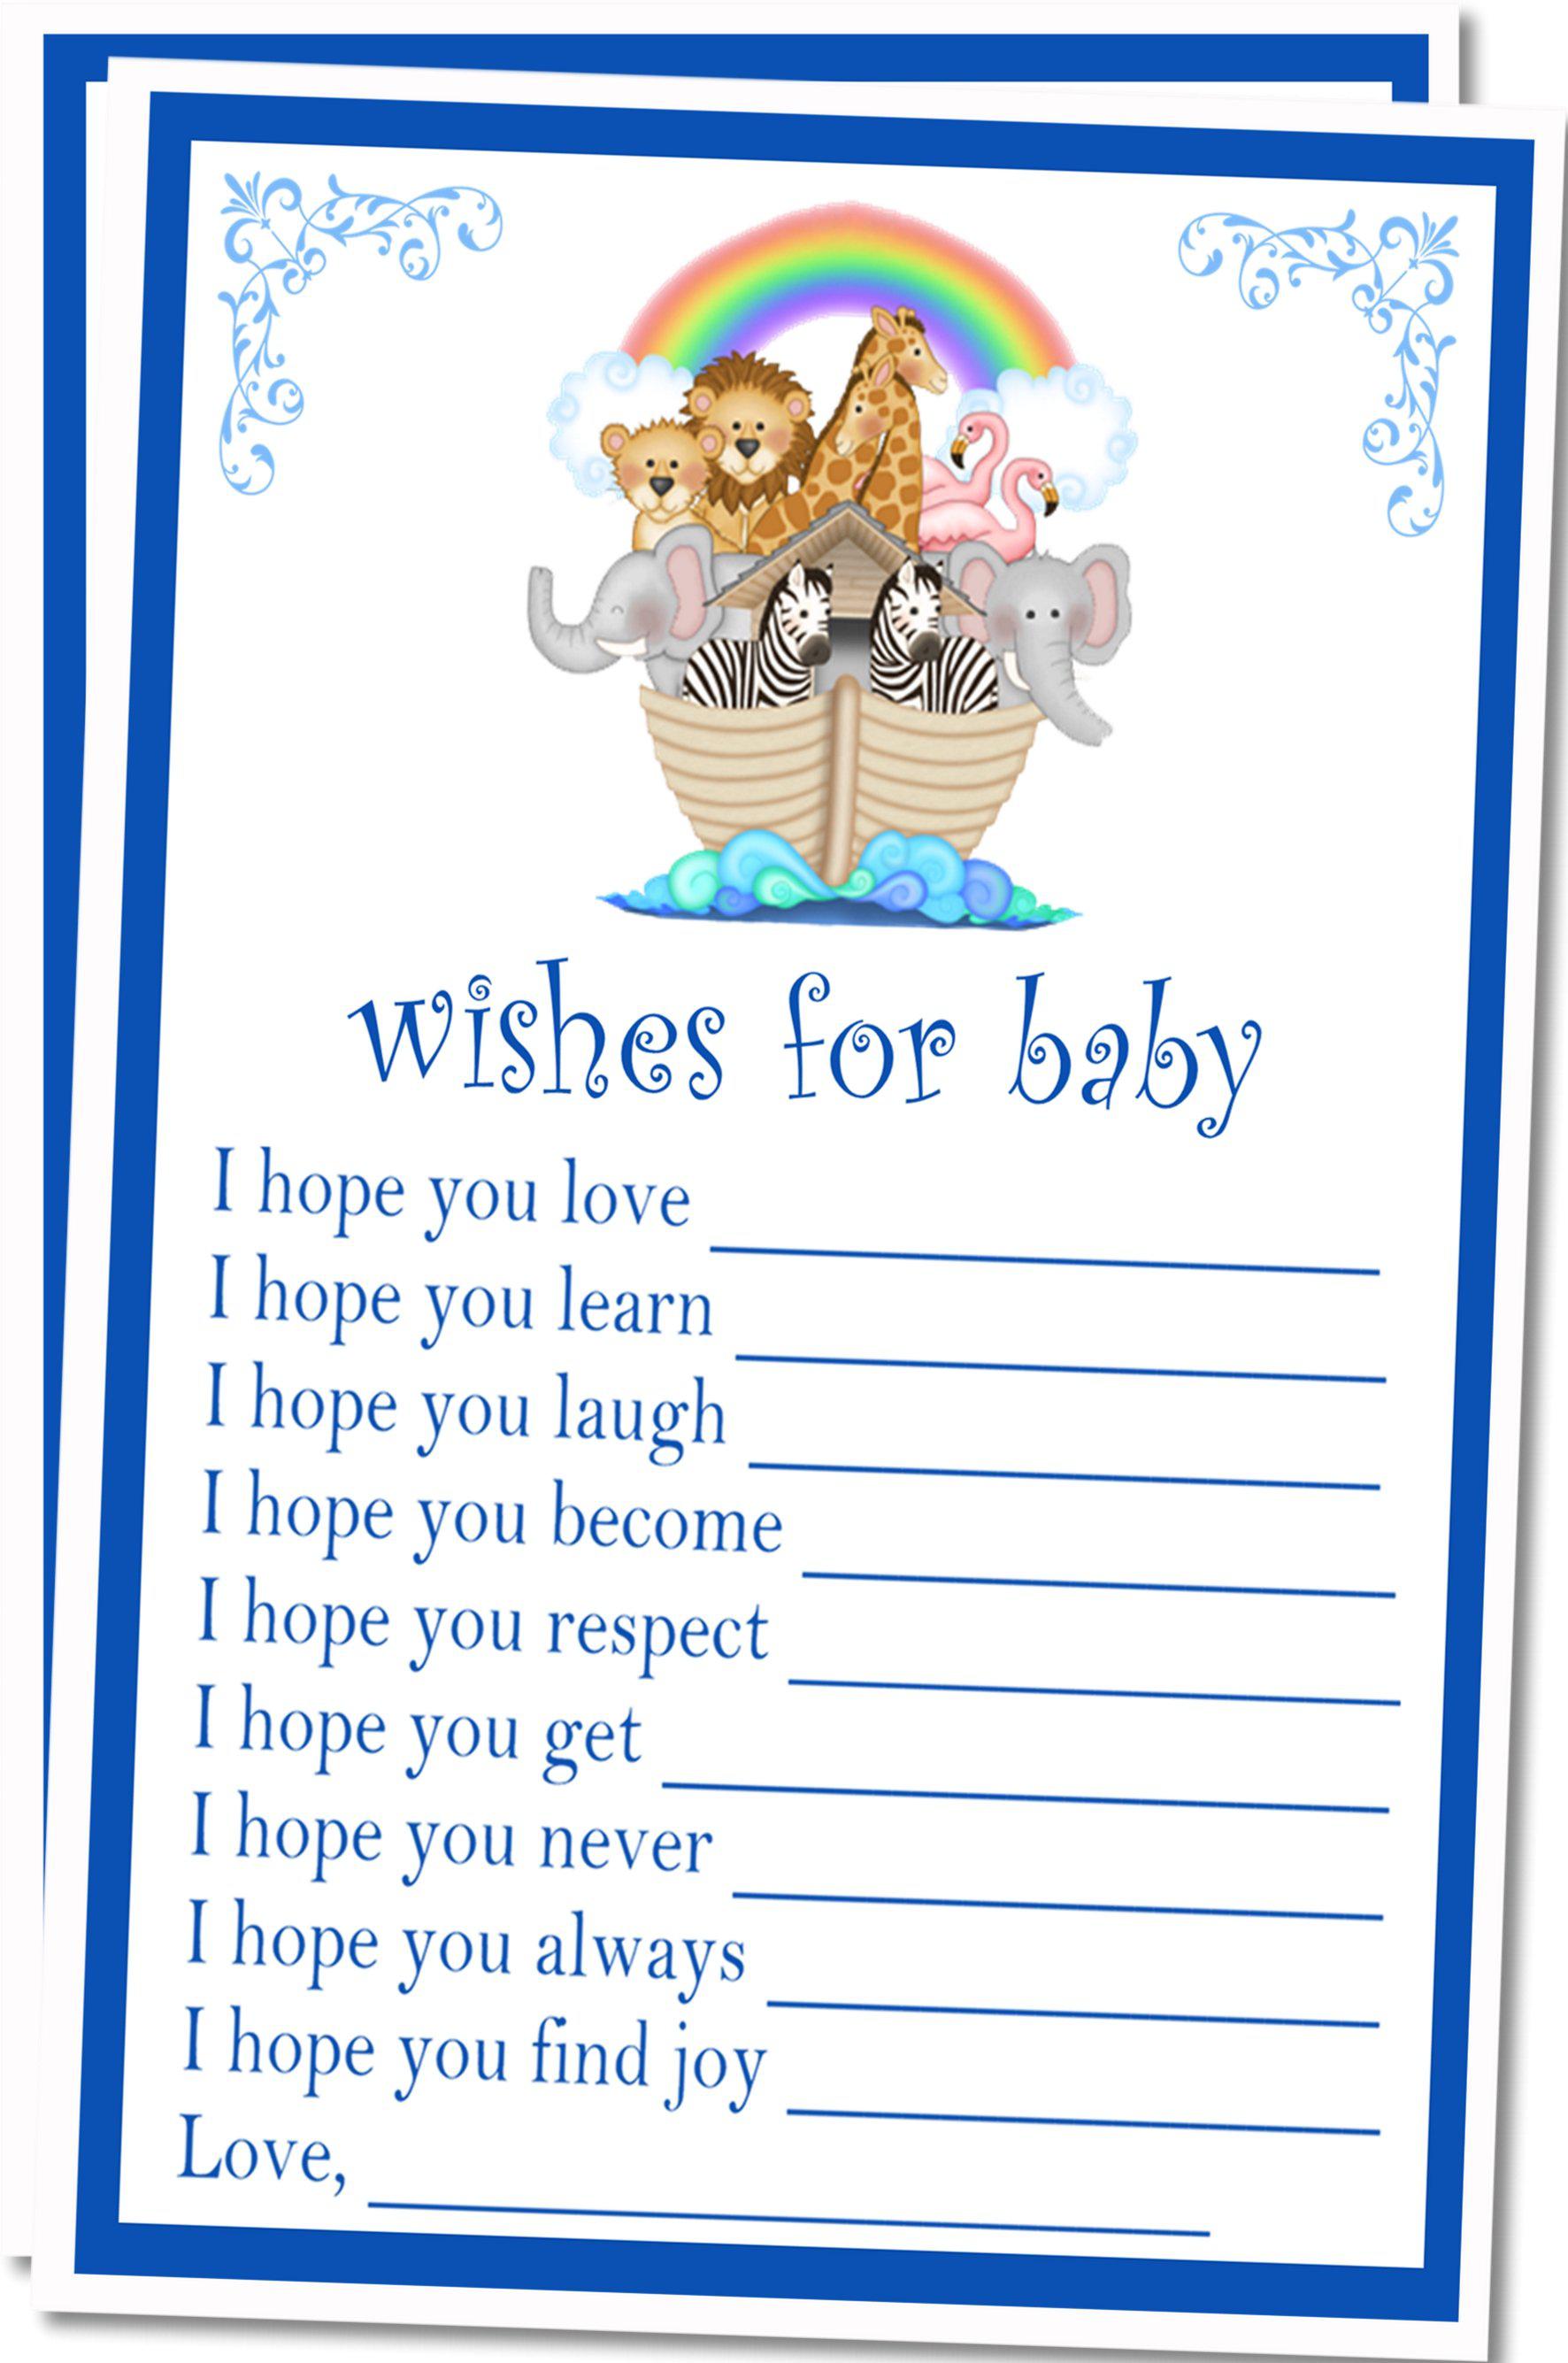 Noah's Ark Baby Shower Wish Cards